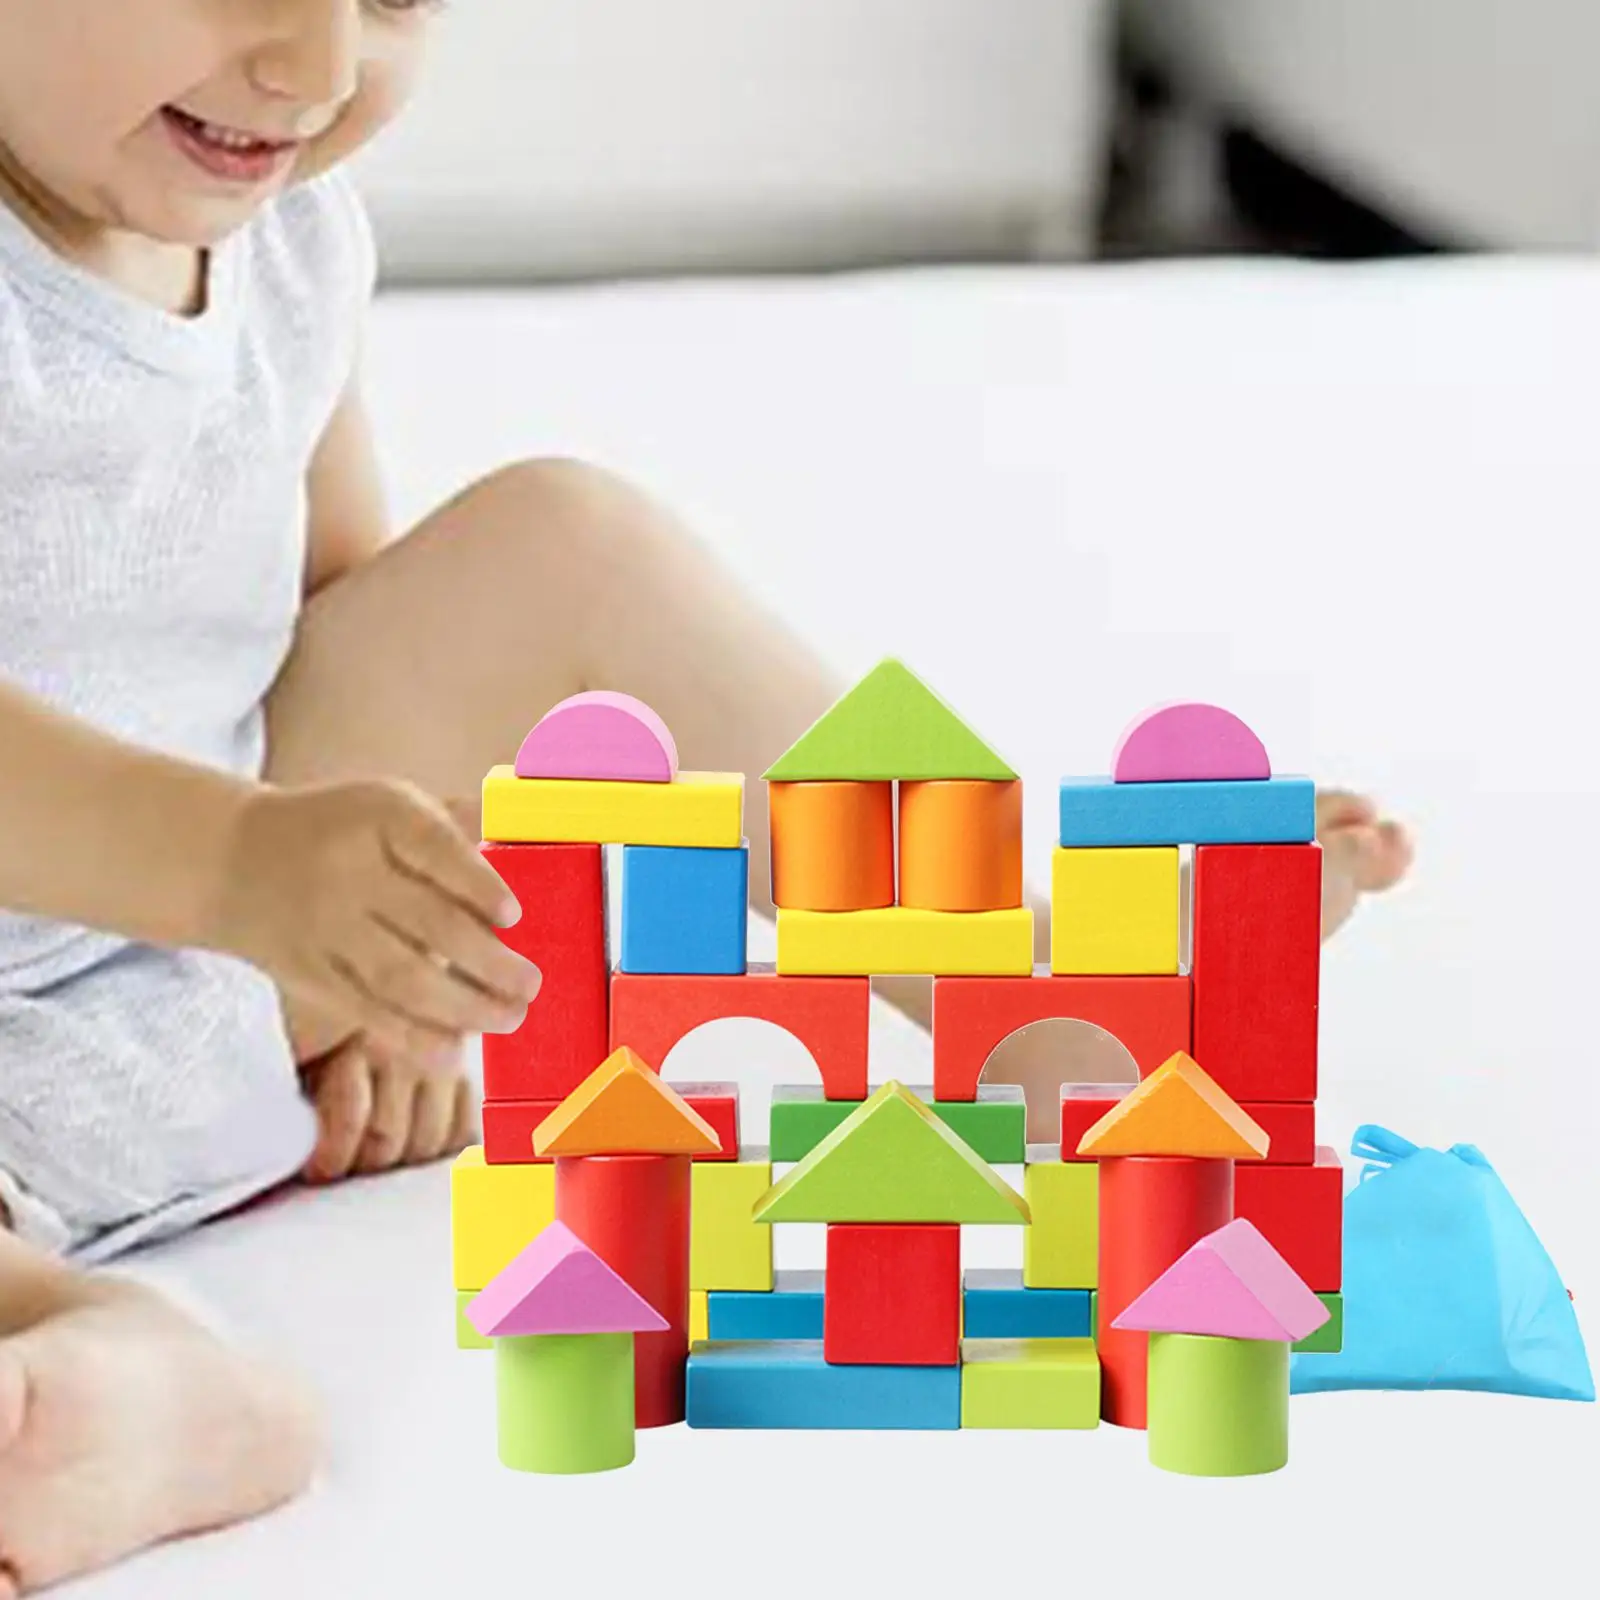 40 Pieces Building Blocks Preschool Learning DIY for Kids Children Gifts